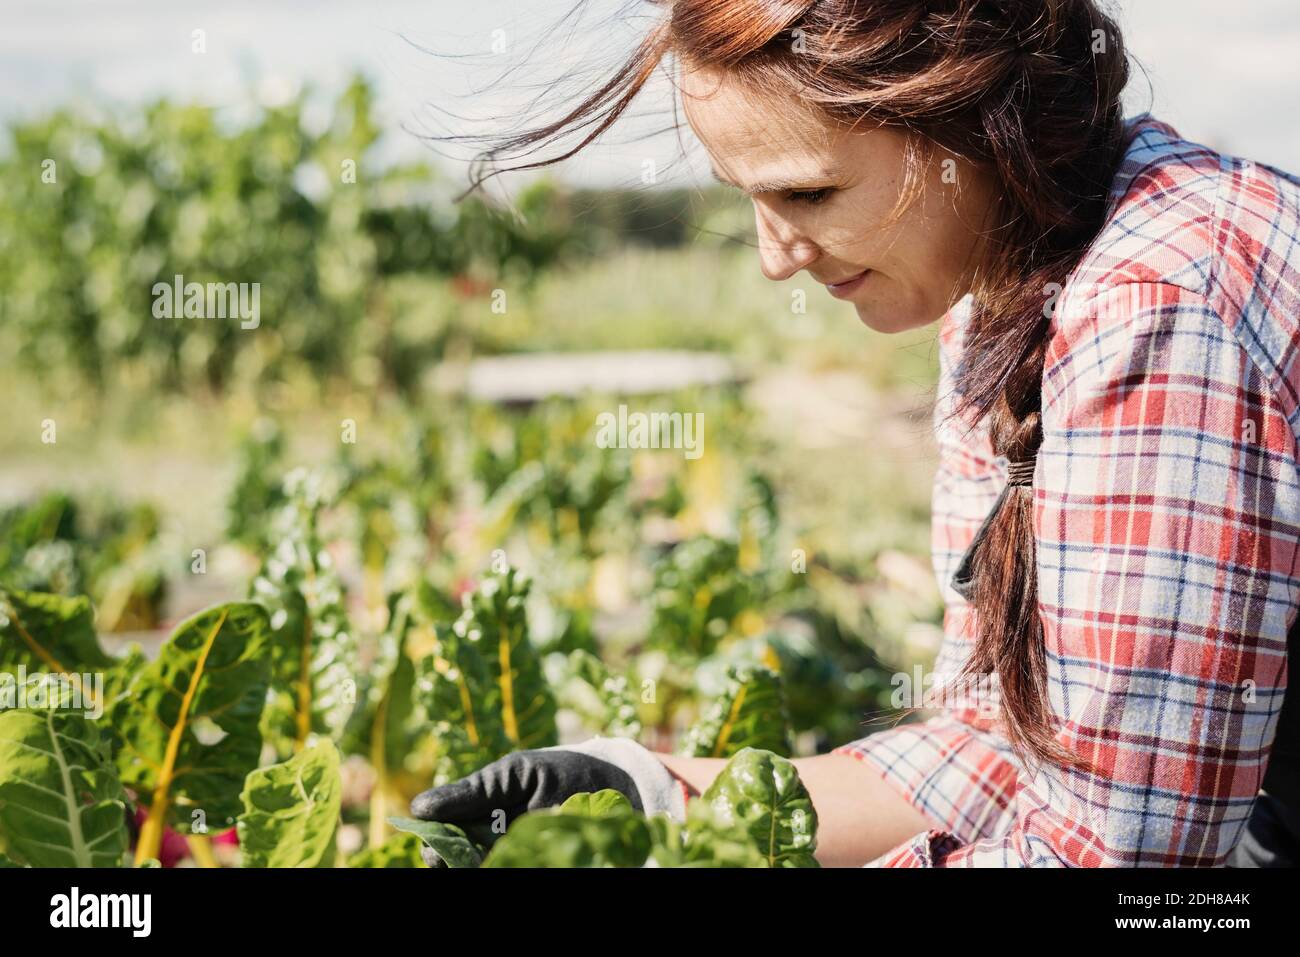 Smiling female gardener working on plants at farm Stock Photo